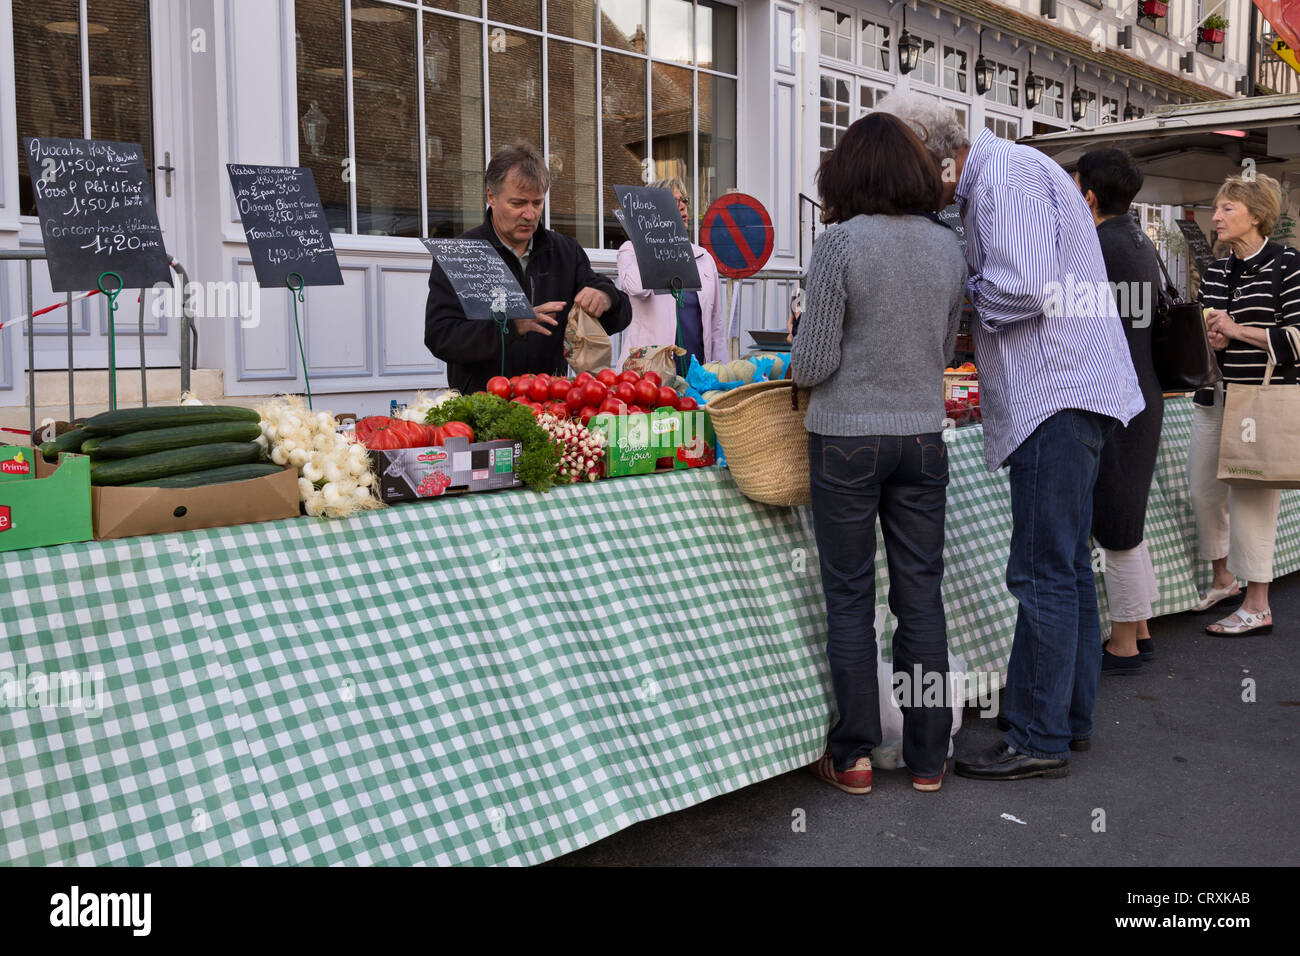 Sunday market at Lyons-la-Foret, Normandy, France Stock Photo